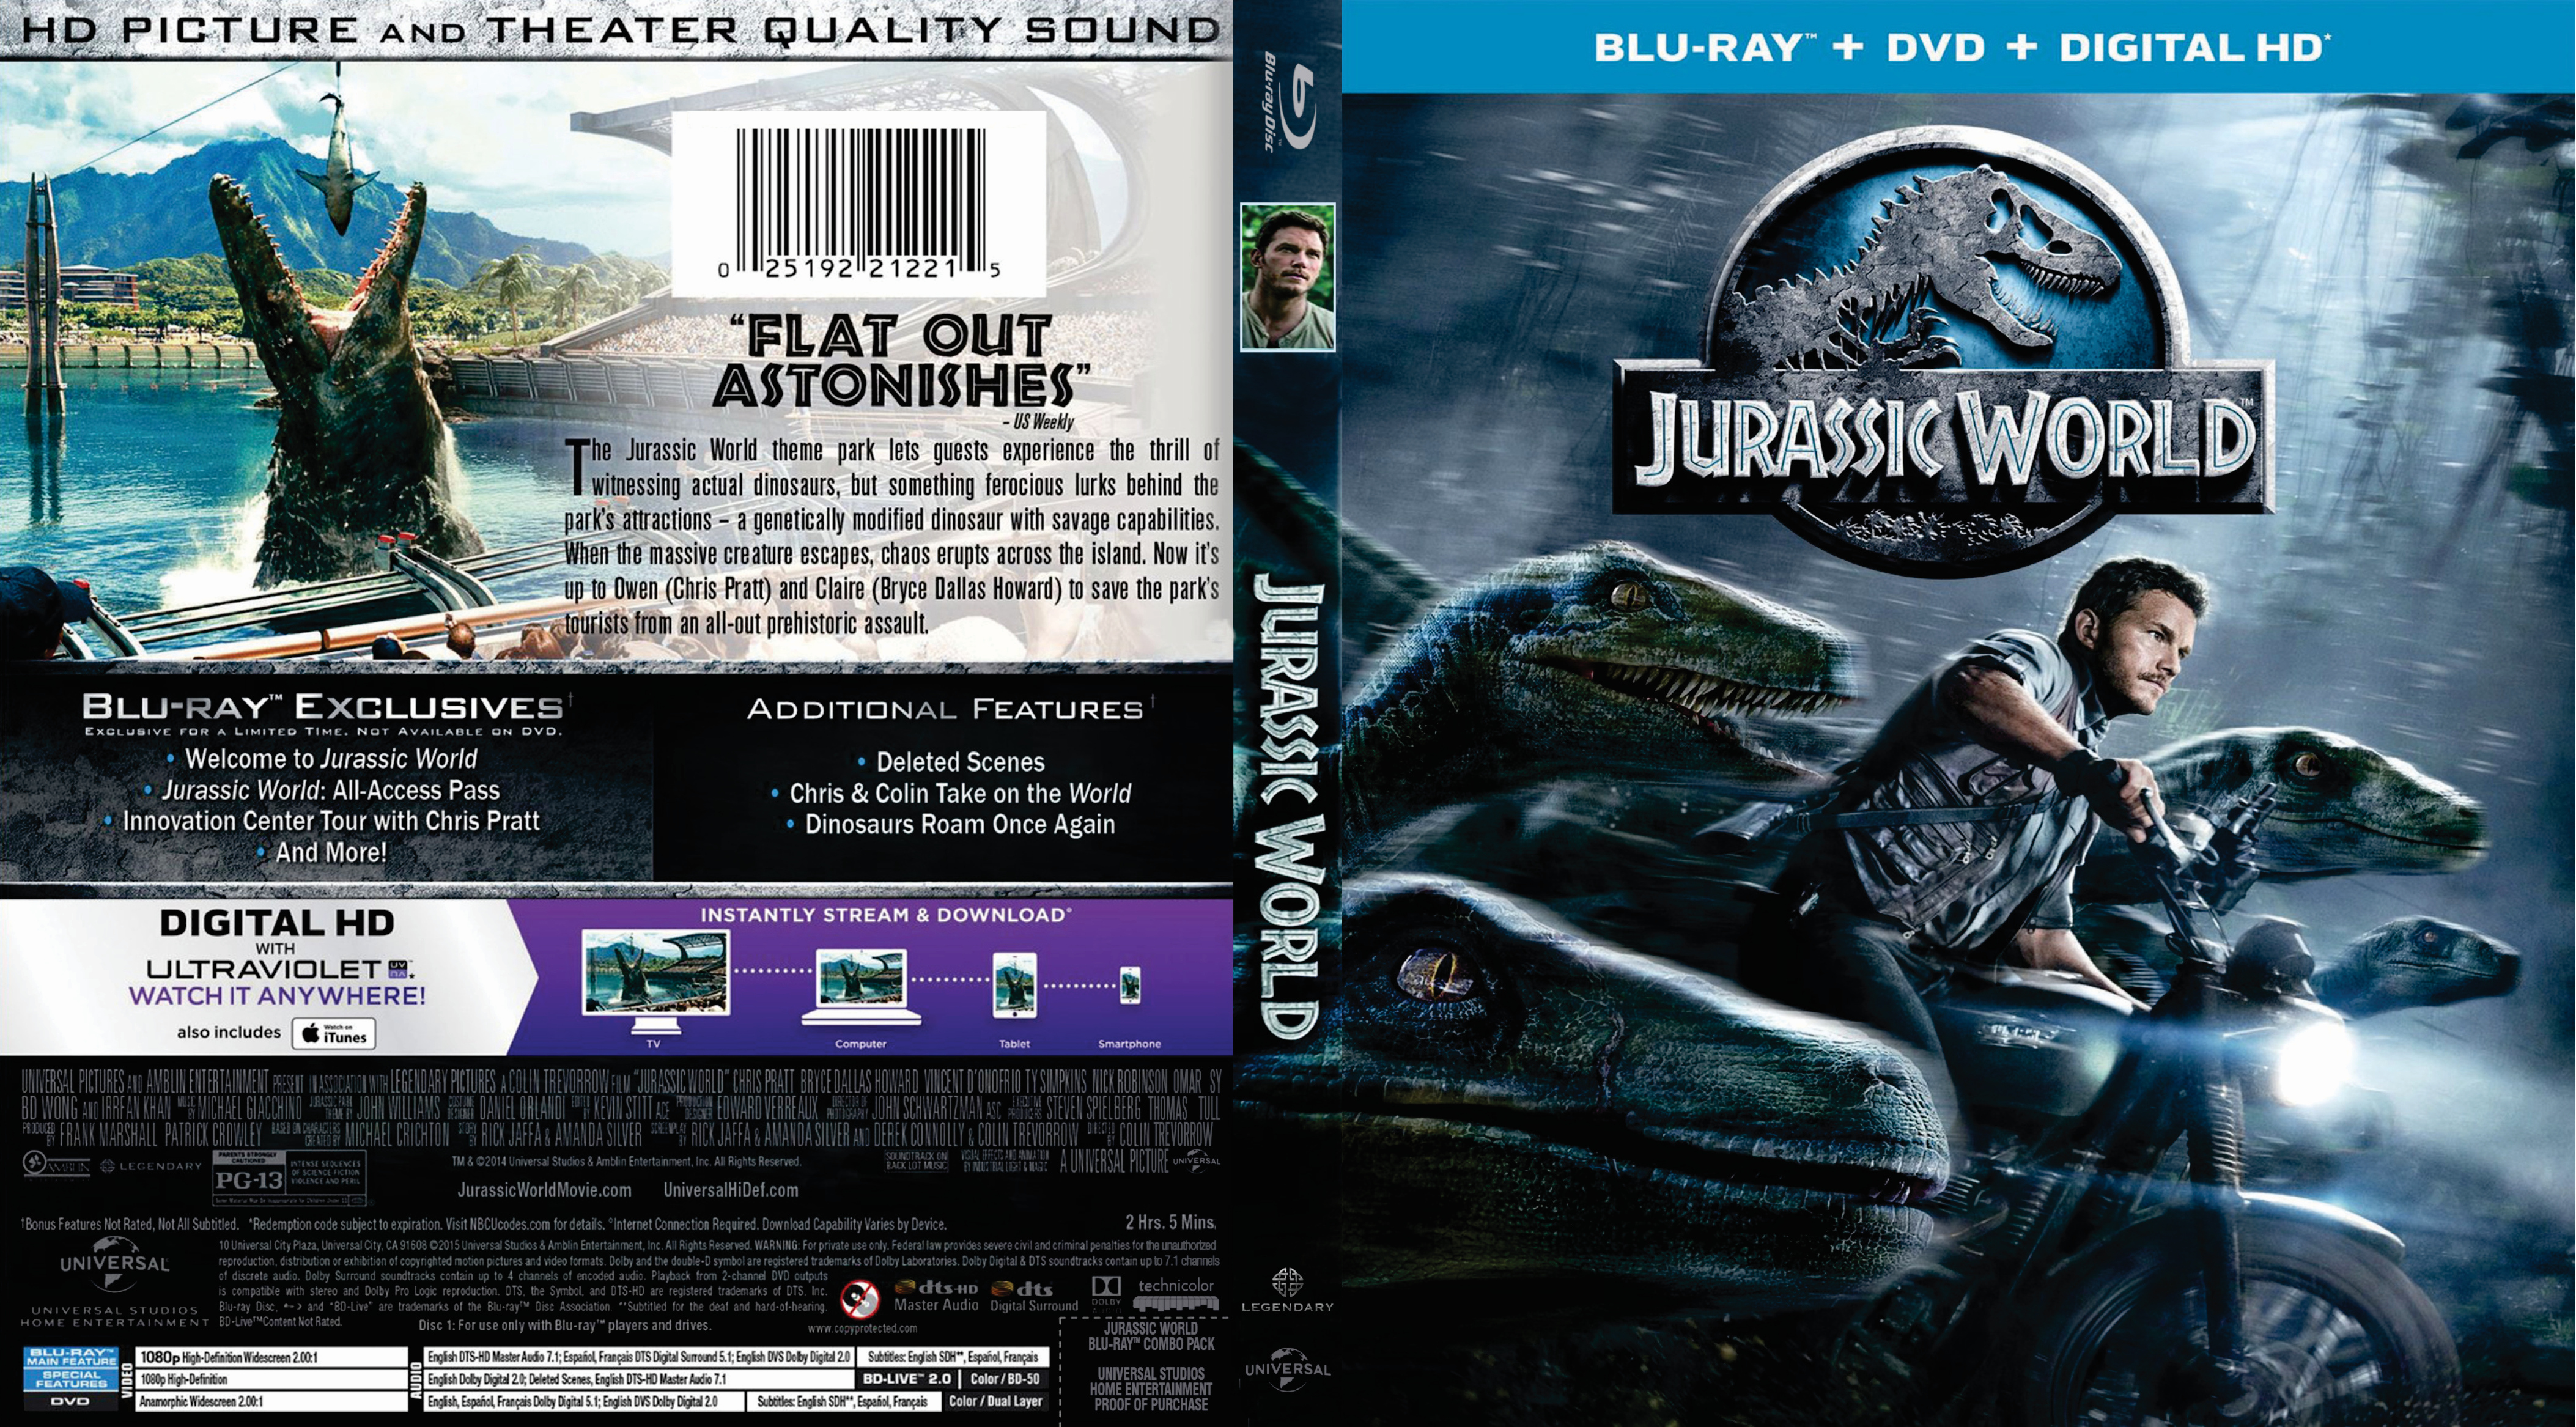 Jaquette DVD Jurassic World Zone 1 (BLU-RAY)